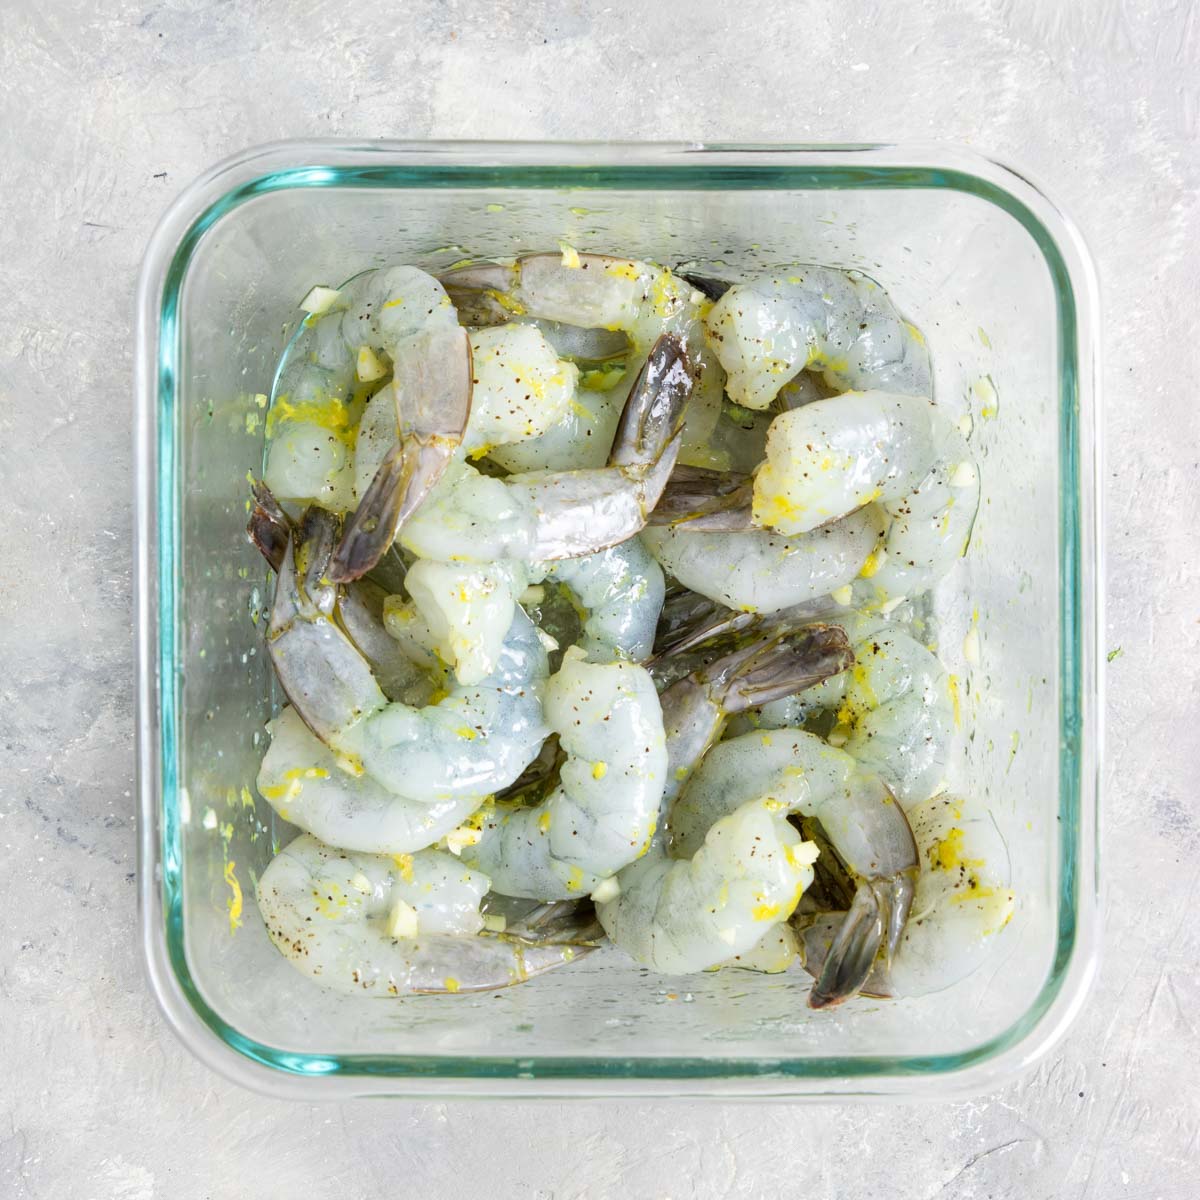 shrimp marinating in garlic, lemon and olive oil